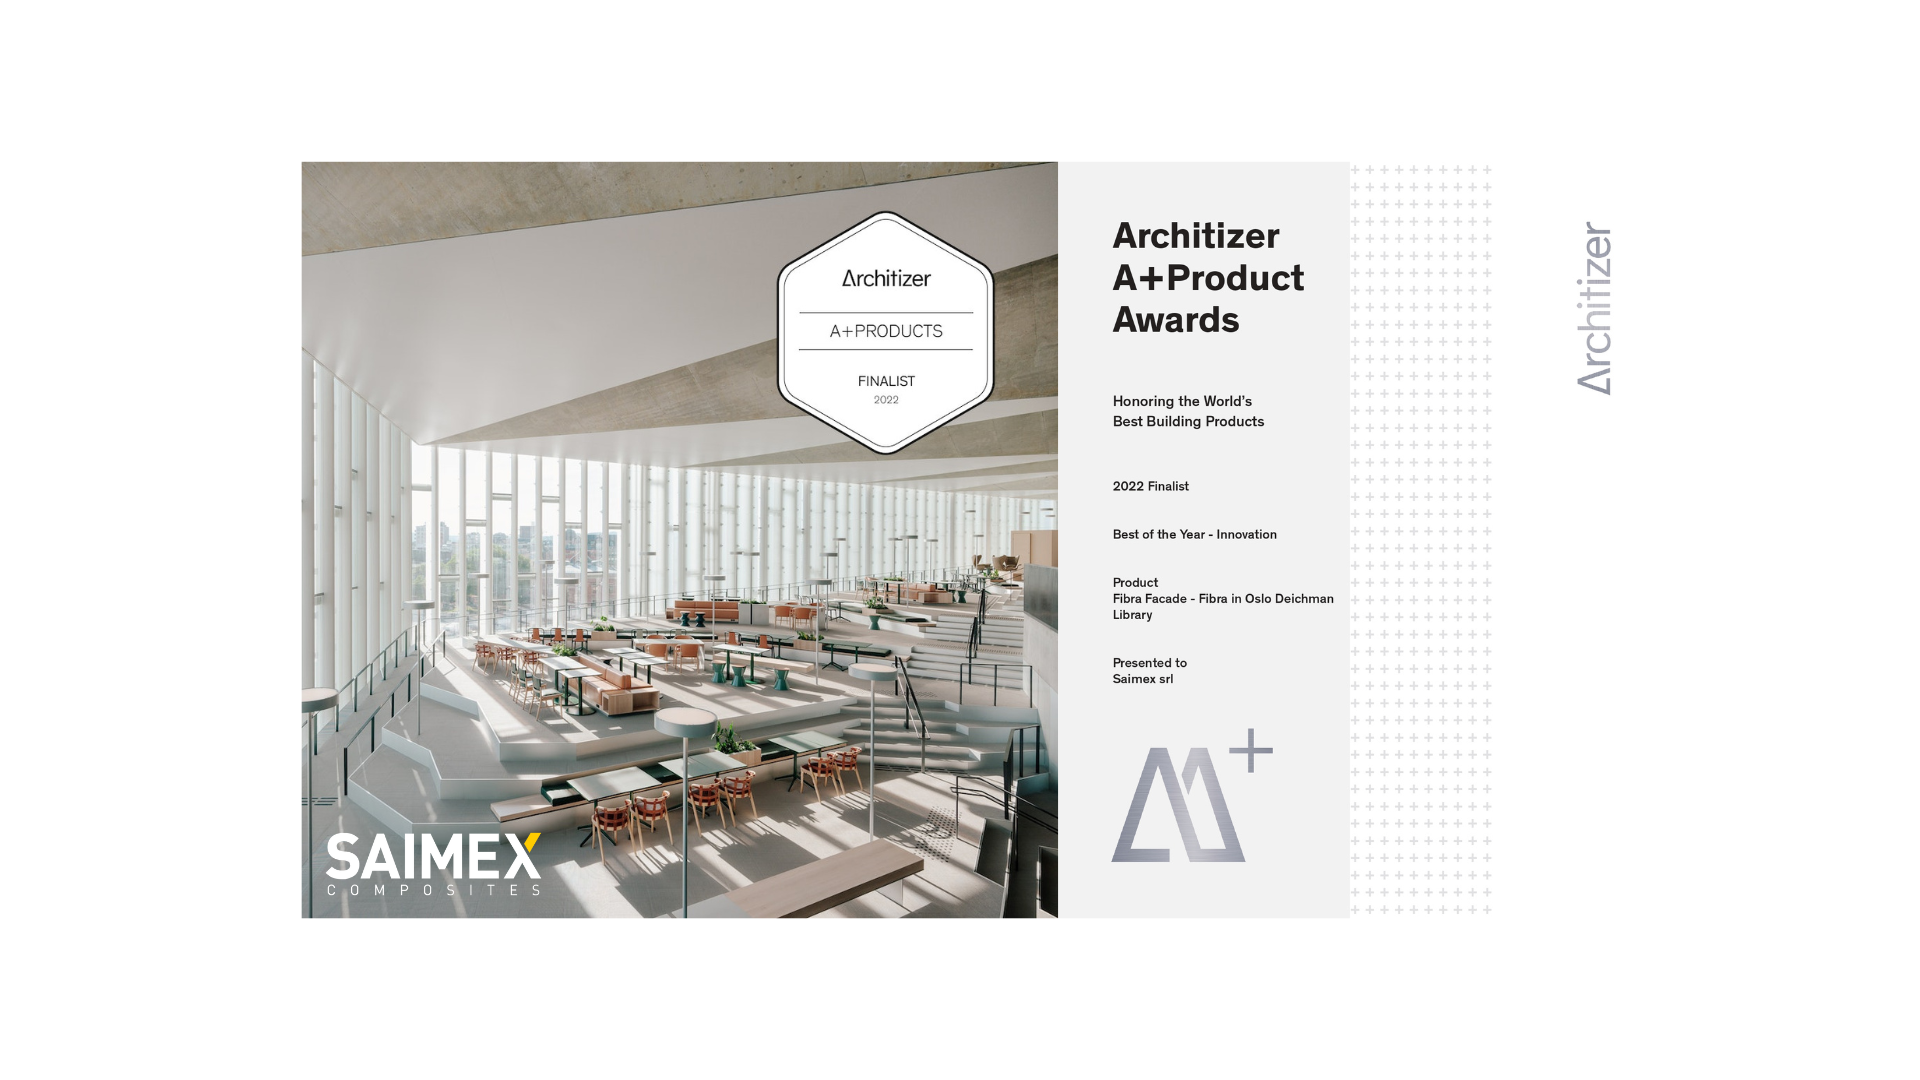 Saimex Srl - winner finalist award Architizer